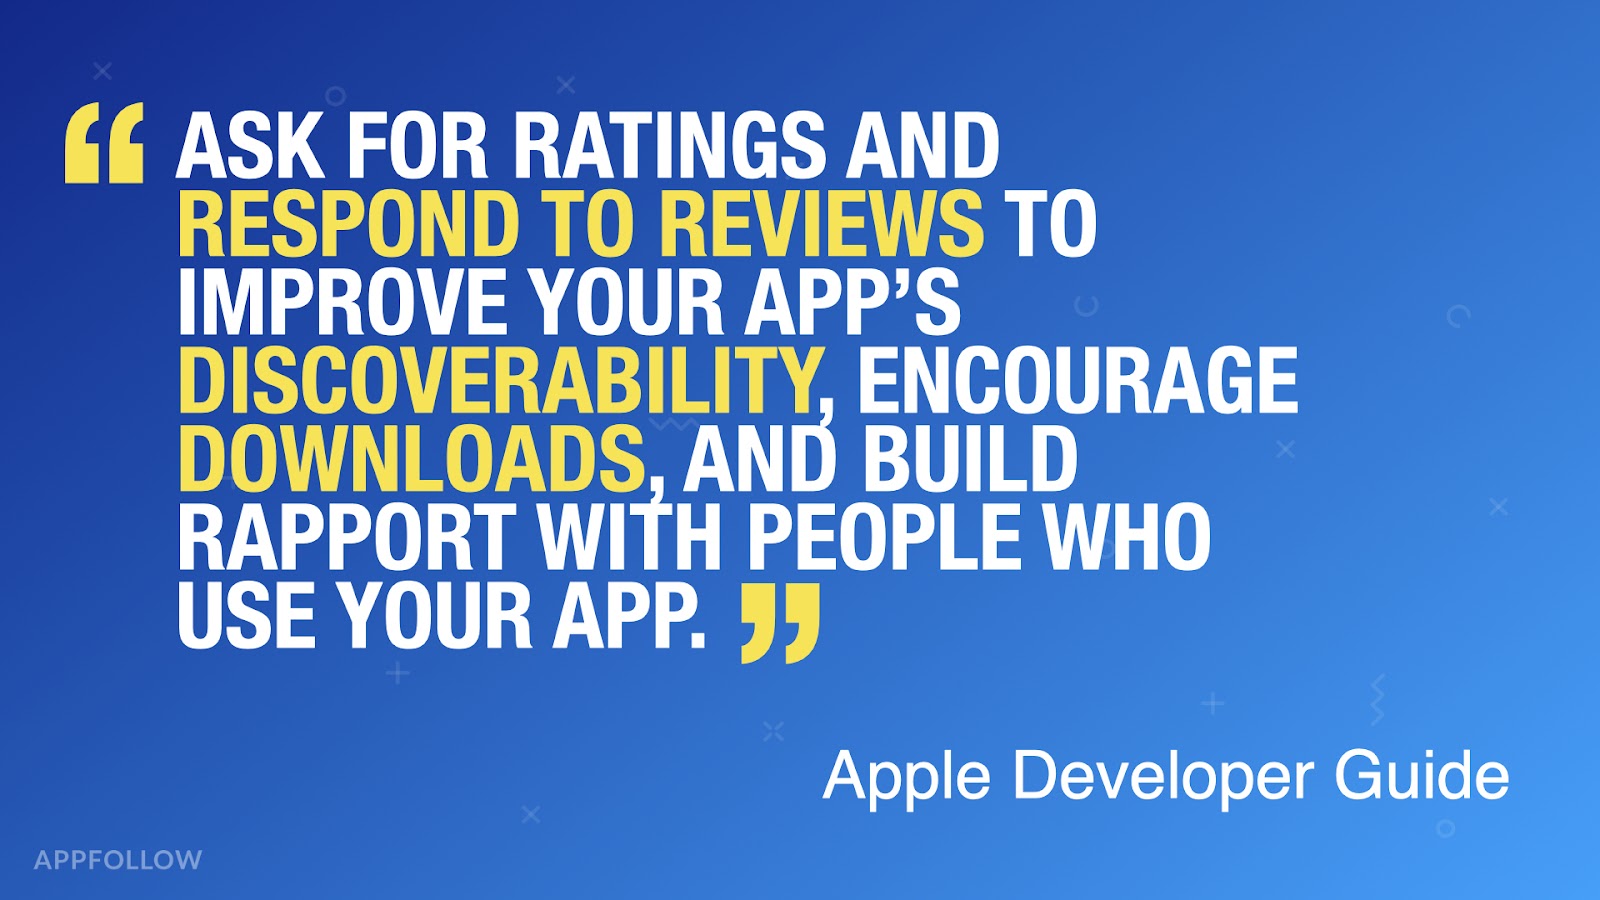 App Developer Guide's advice on Store Ratings & Reviews